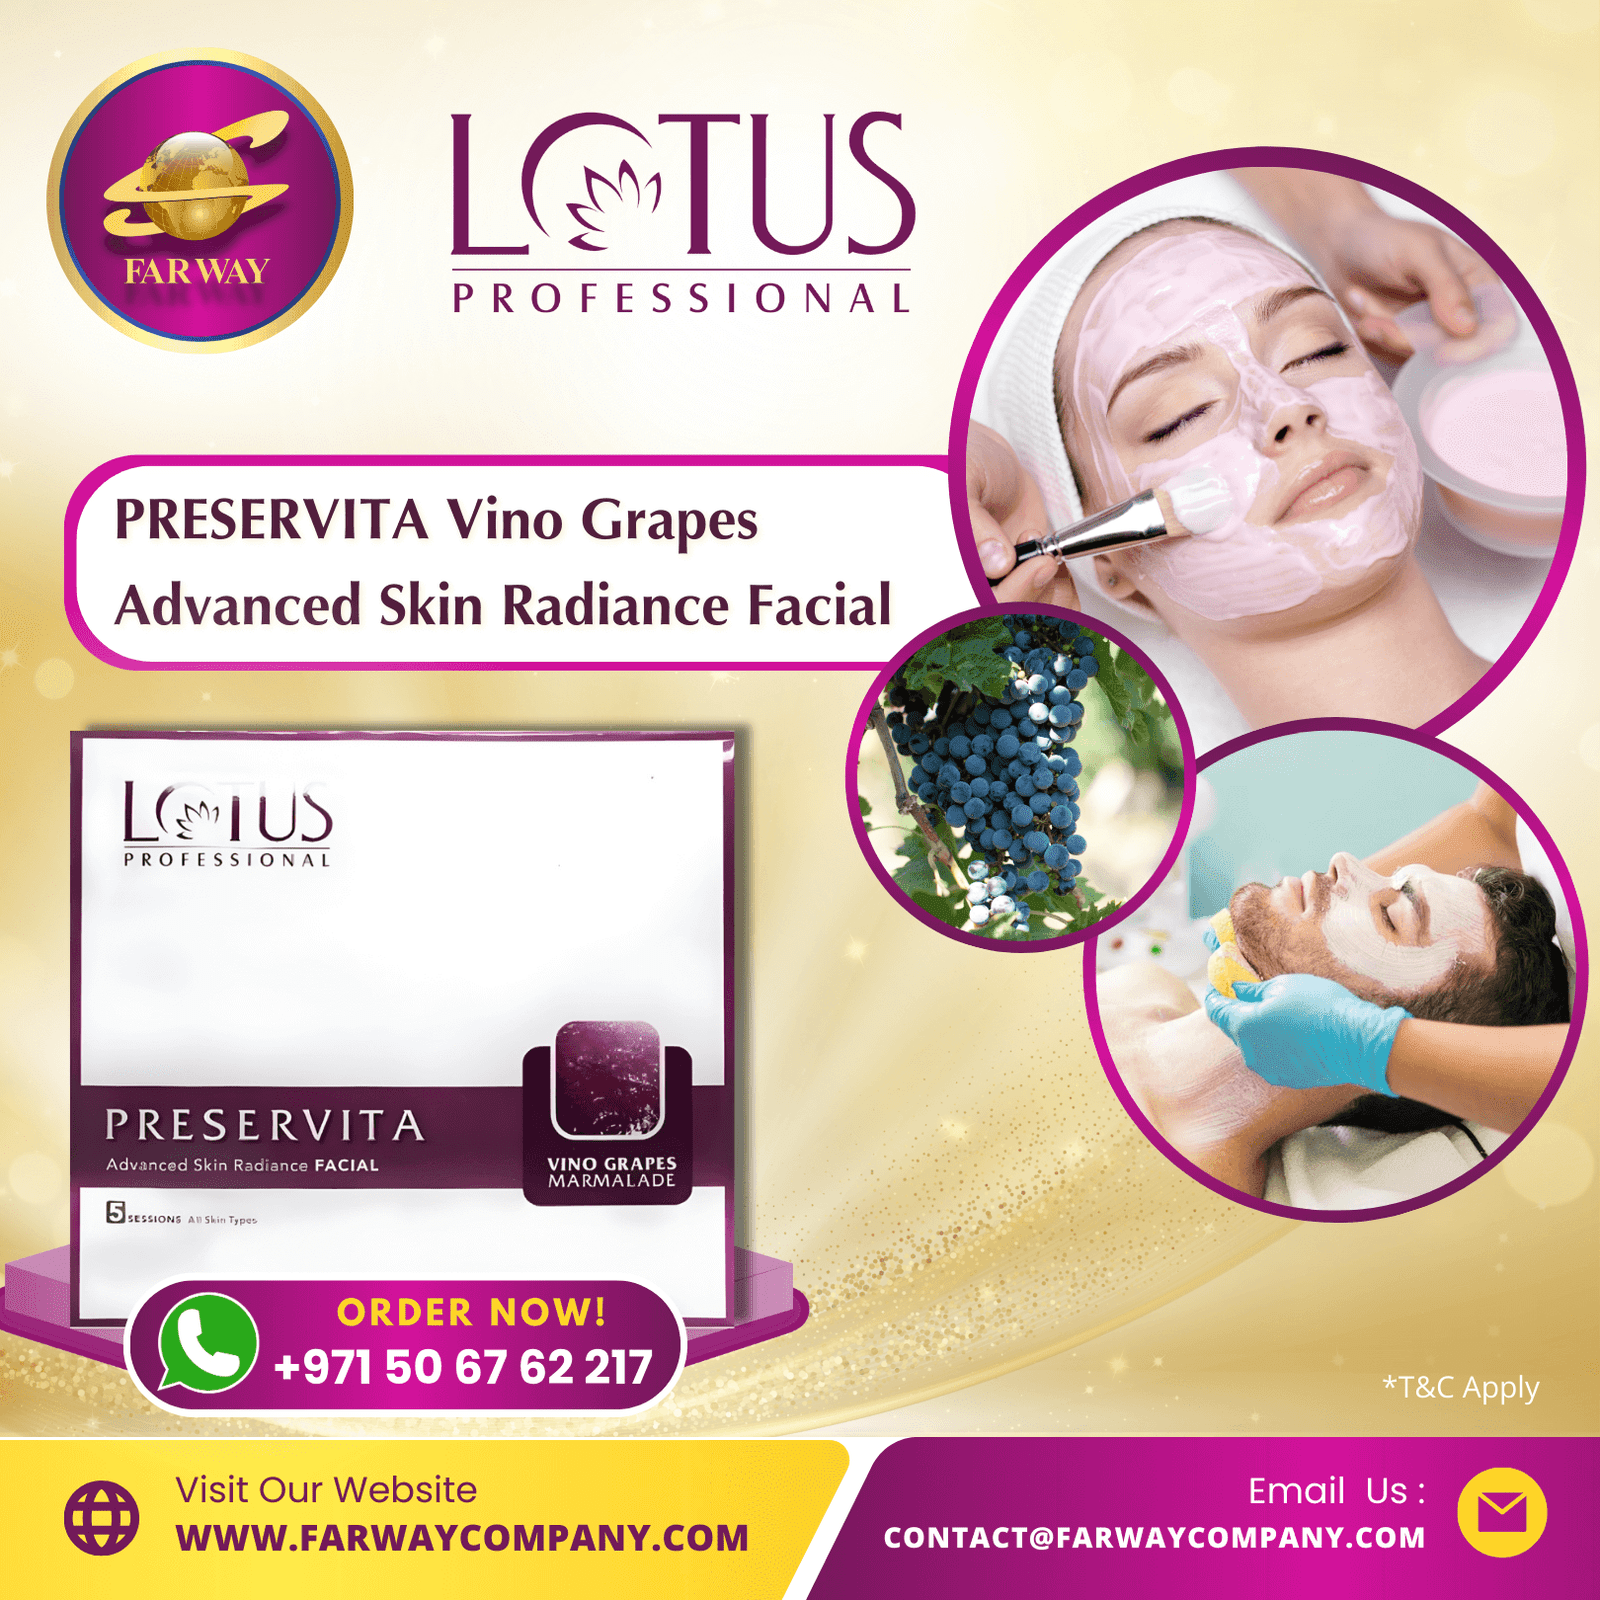 Lotus Professional Preservita Vino Grapes Facial Kit for Salon Distributor in Dubai, UAE